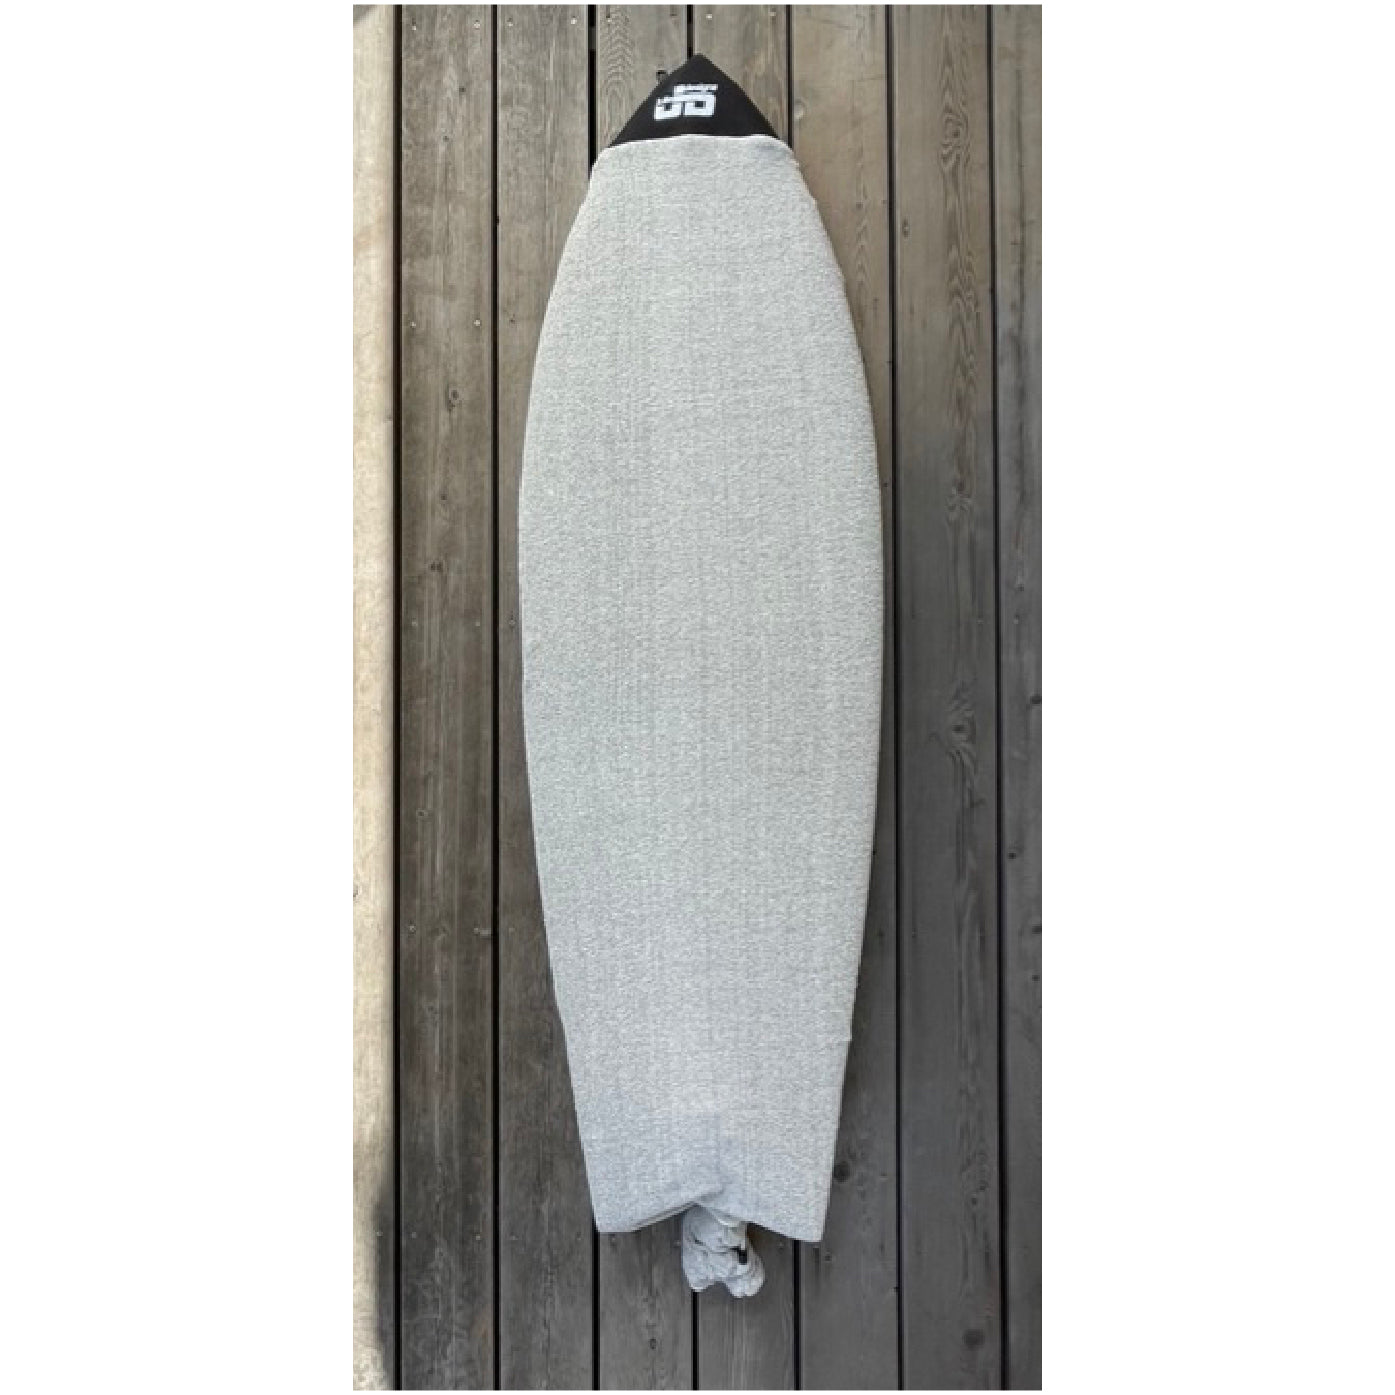 Julie Designs Surf Board Sticksock Fish 6'6"